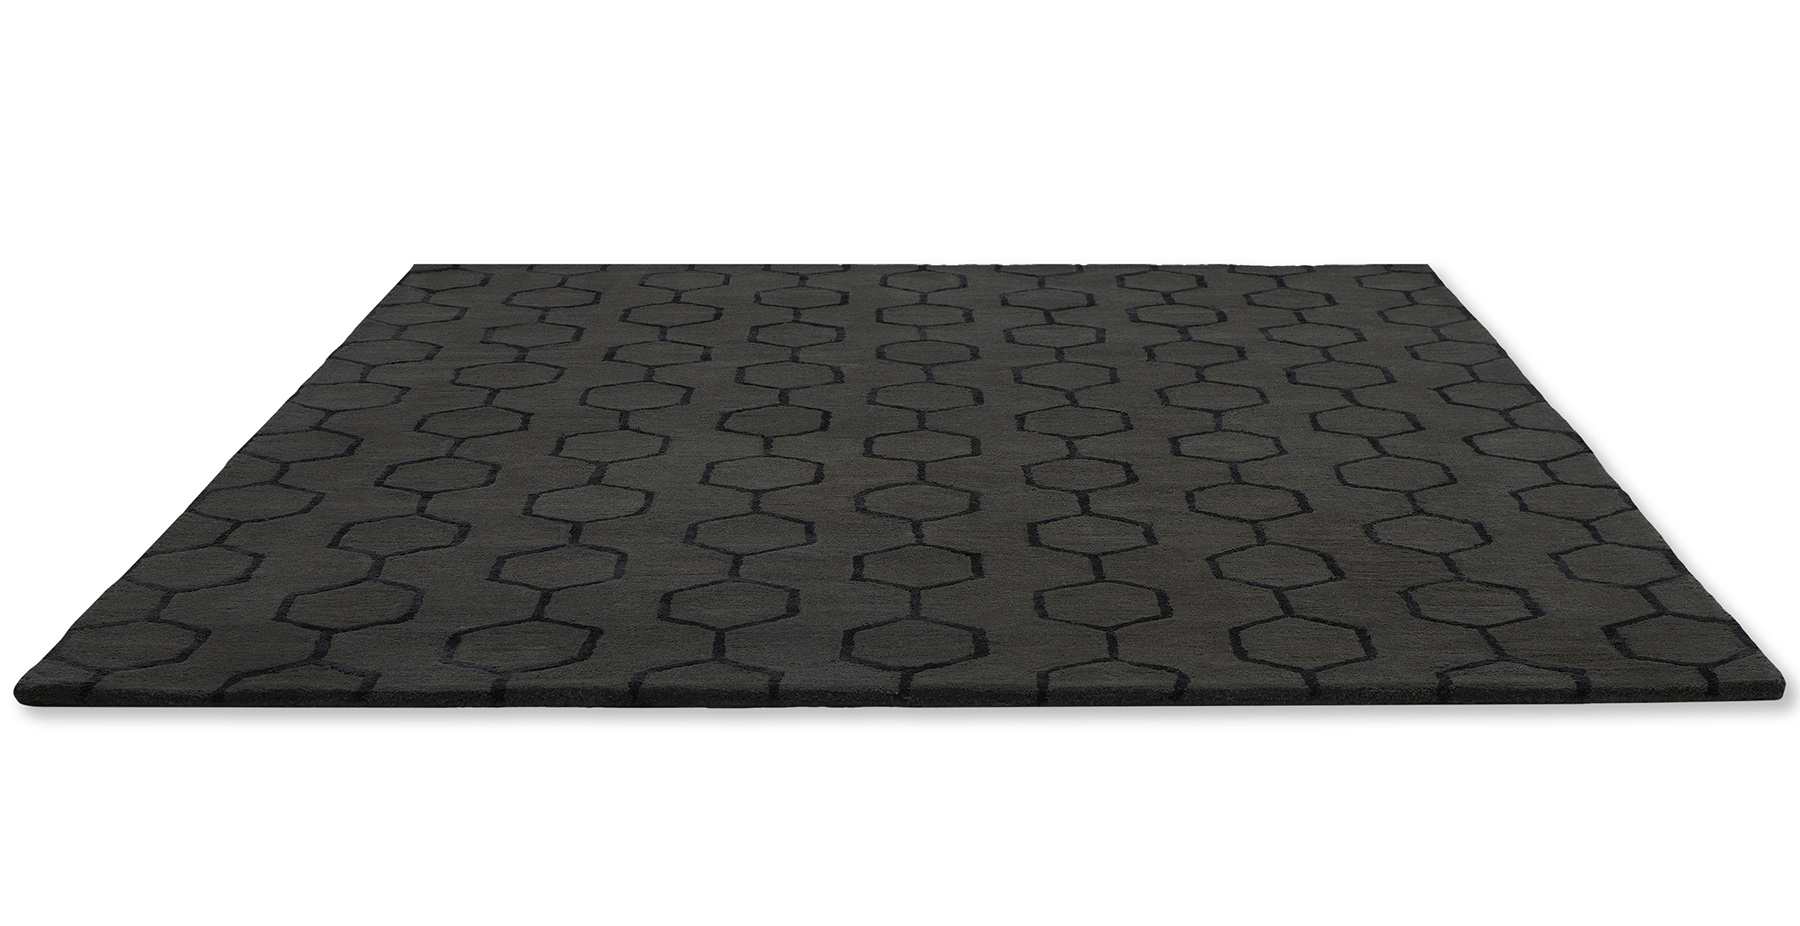 Geometric Noir Rug ☞ Size: 5' 7" x 8' (170 x 240 cm)